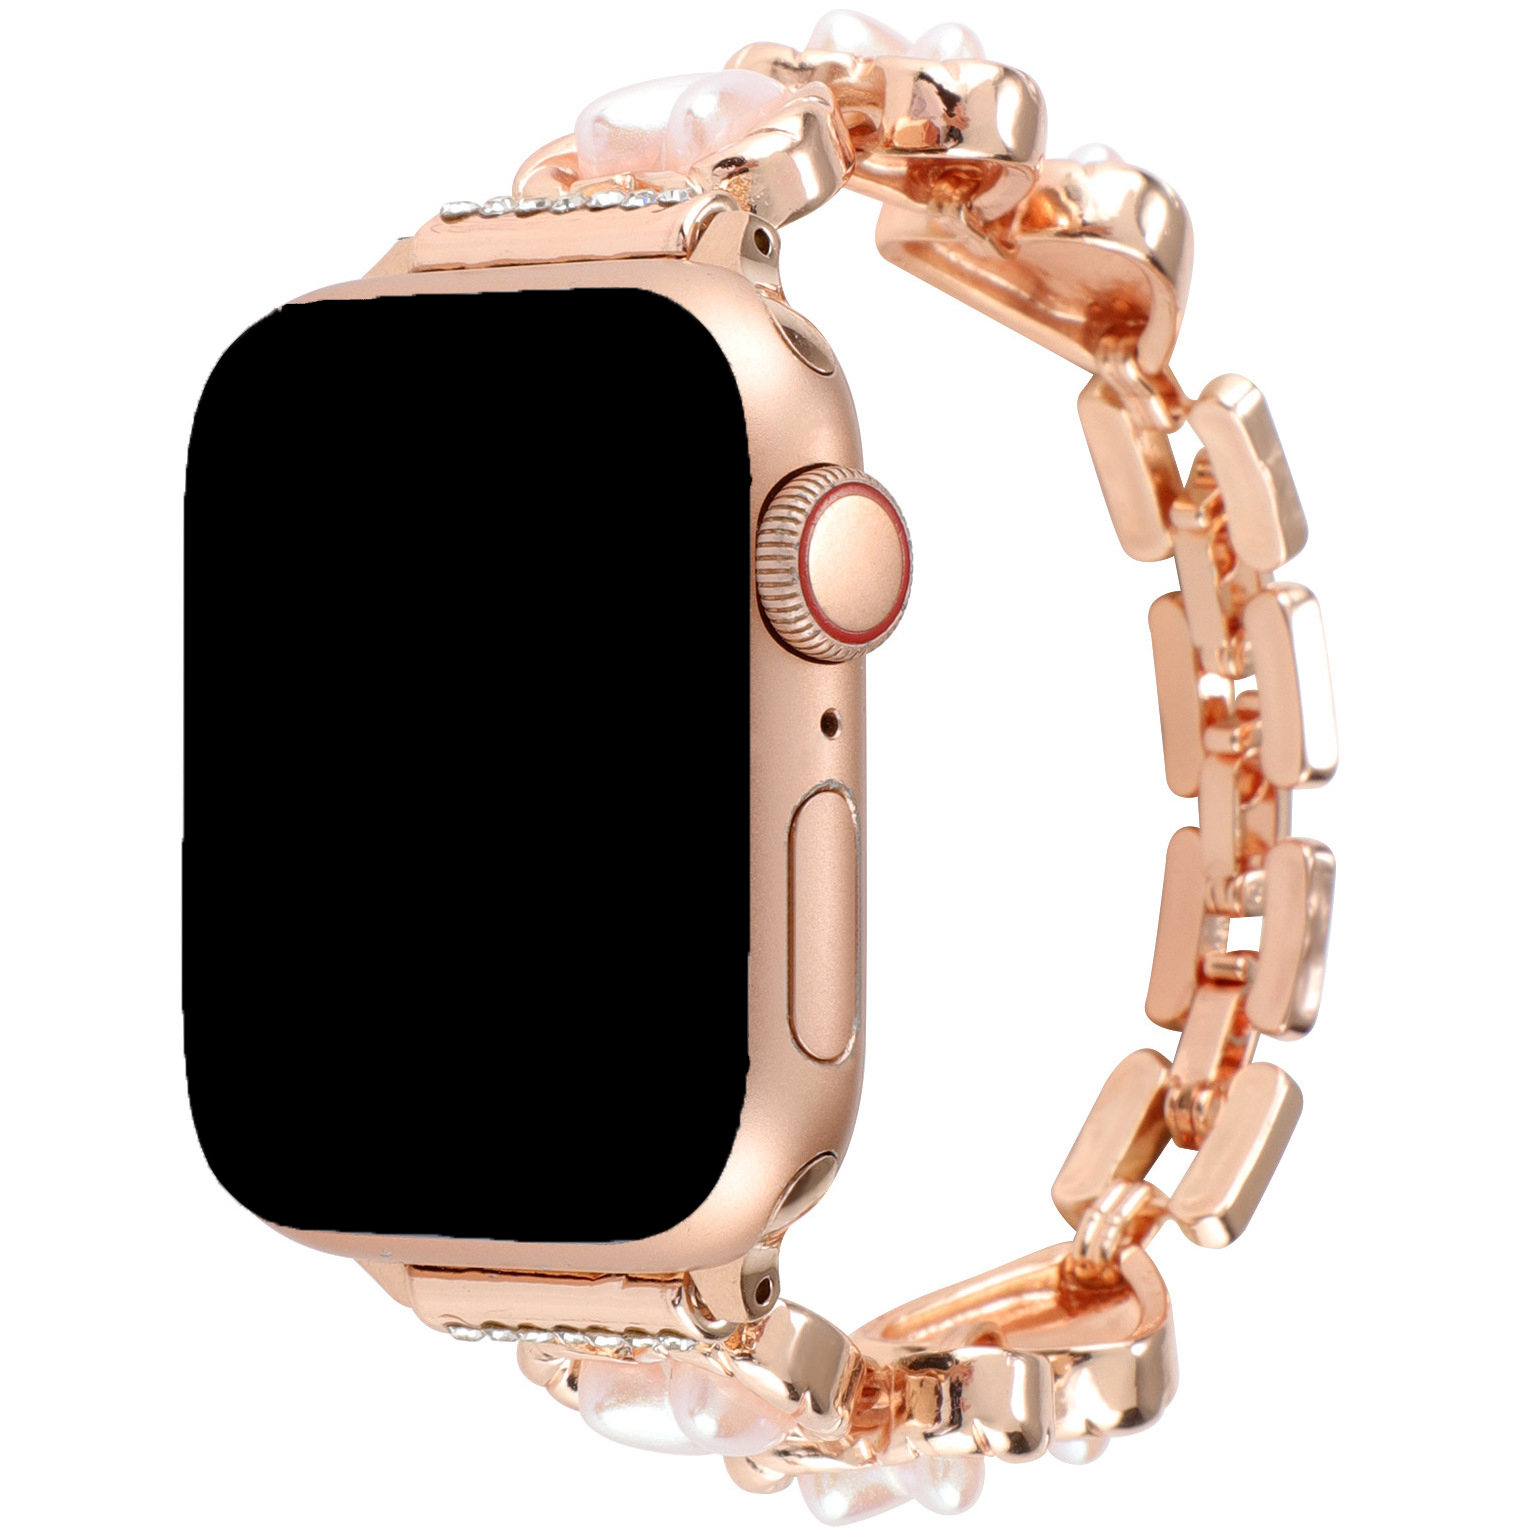 Apple Watch hart stalen schakel band - Demi rose goud